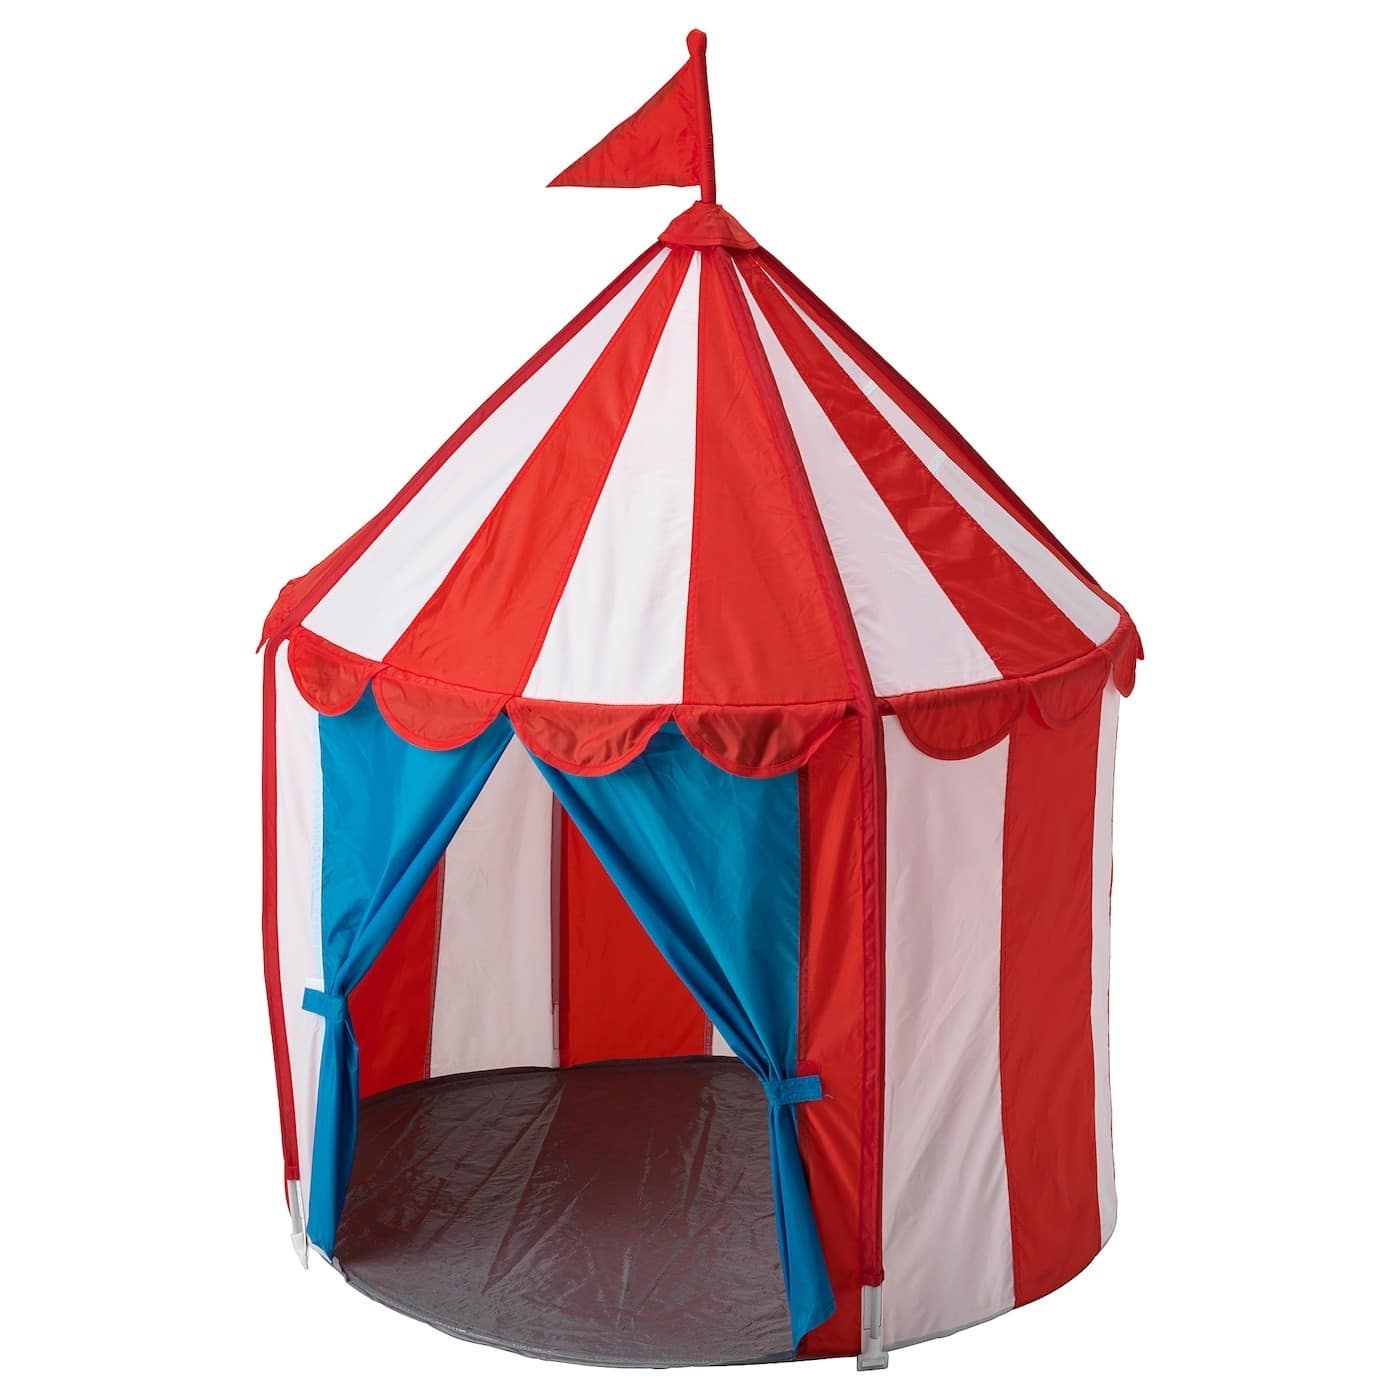 cirkustaelt-children-s-tent__0710148_PE727349_S5